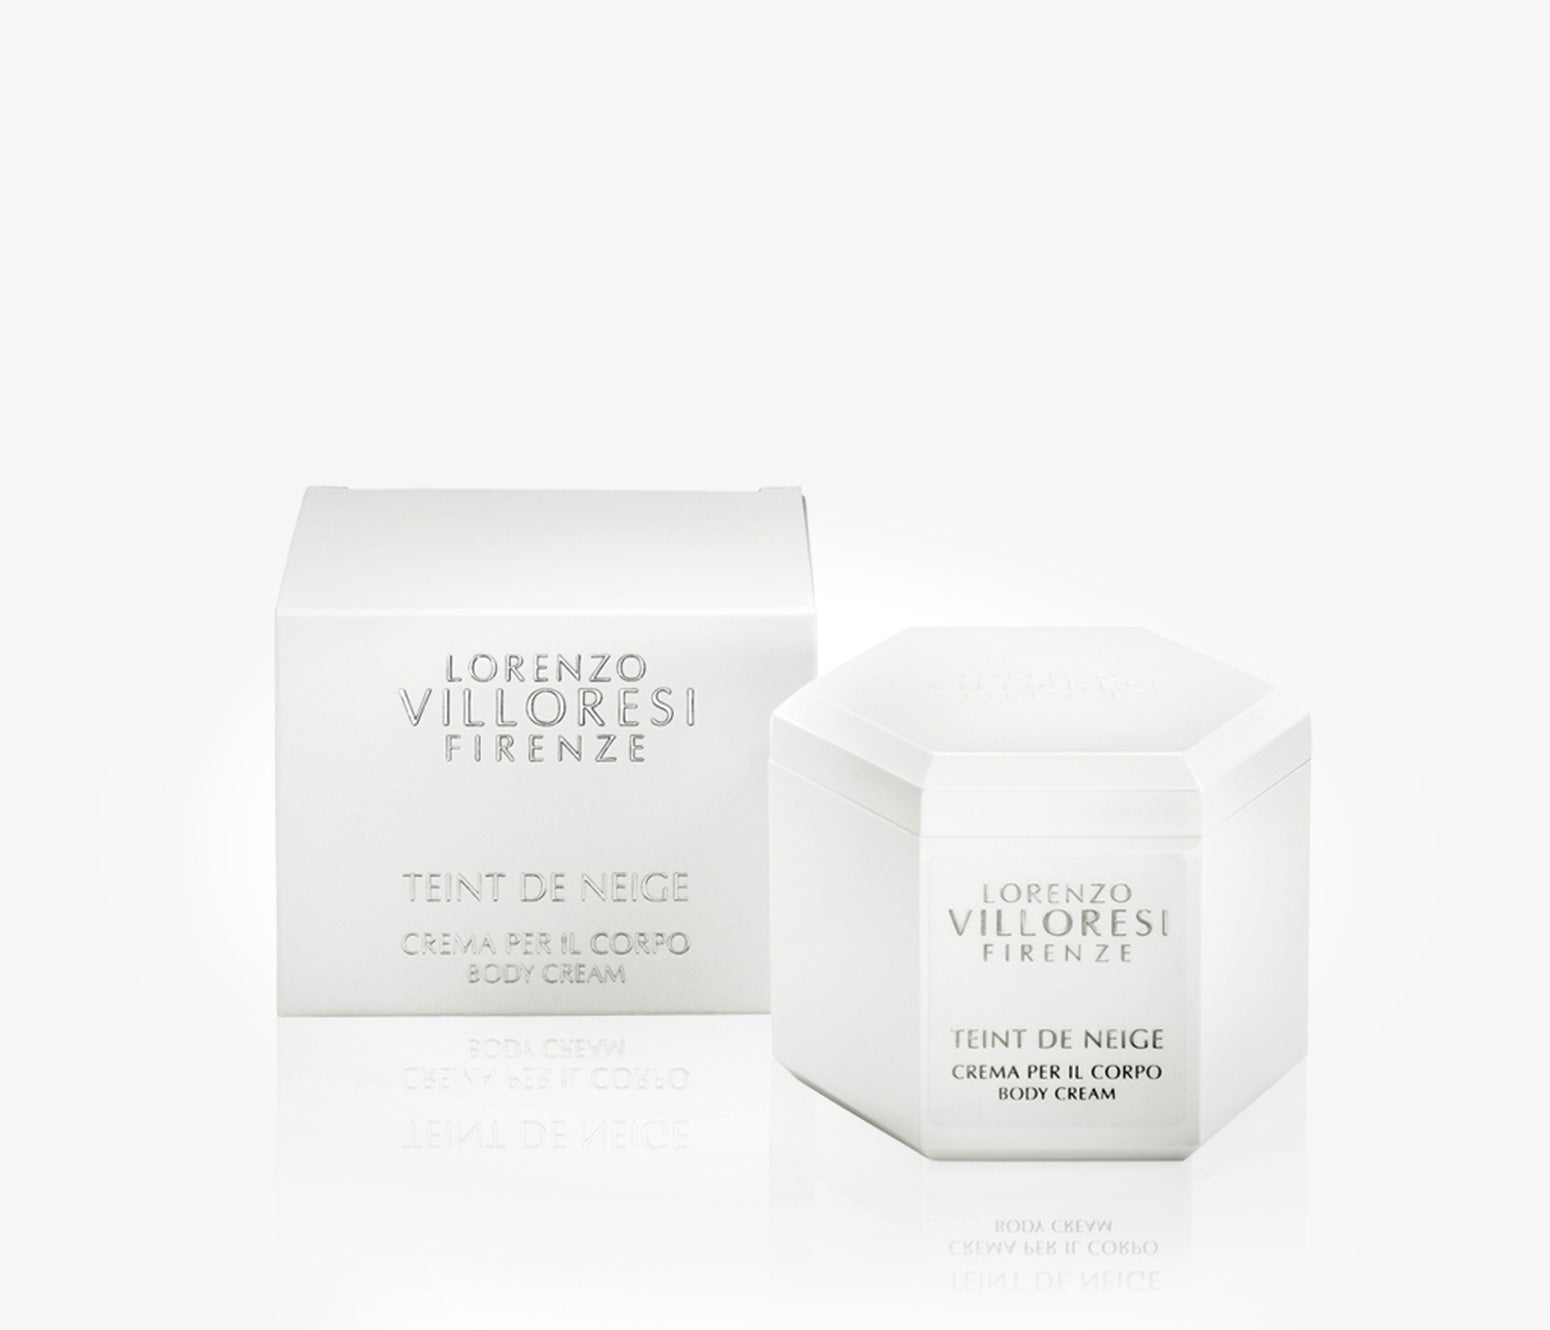 Lorenzo Villoresi - Teint de Neige Body Cream - 200ml - TDC2695 - Product Image - Body Cream - Les Senteurs